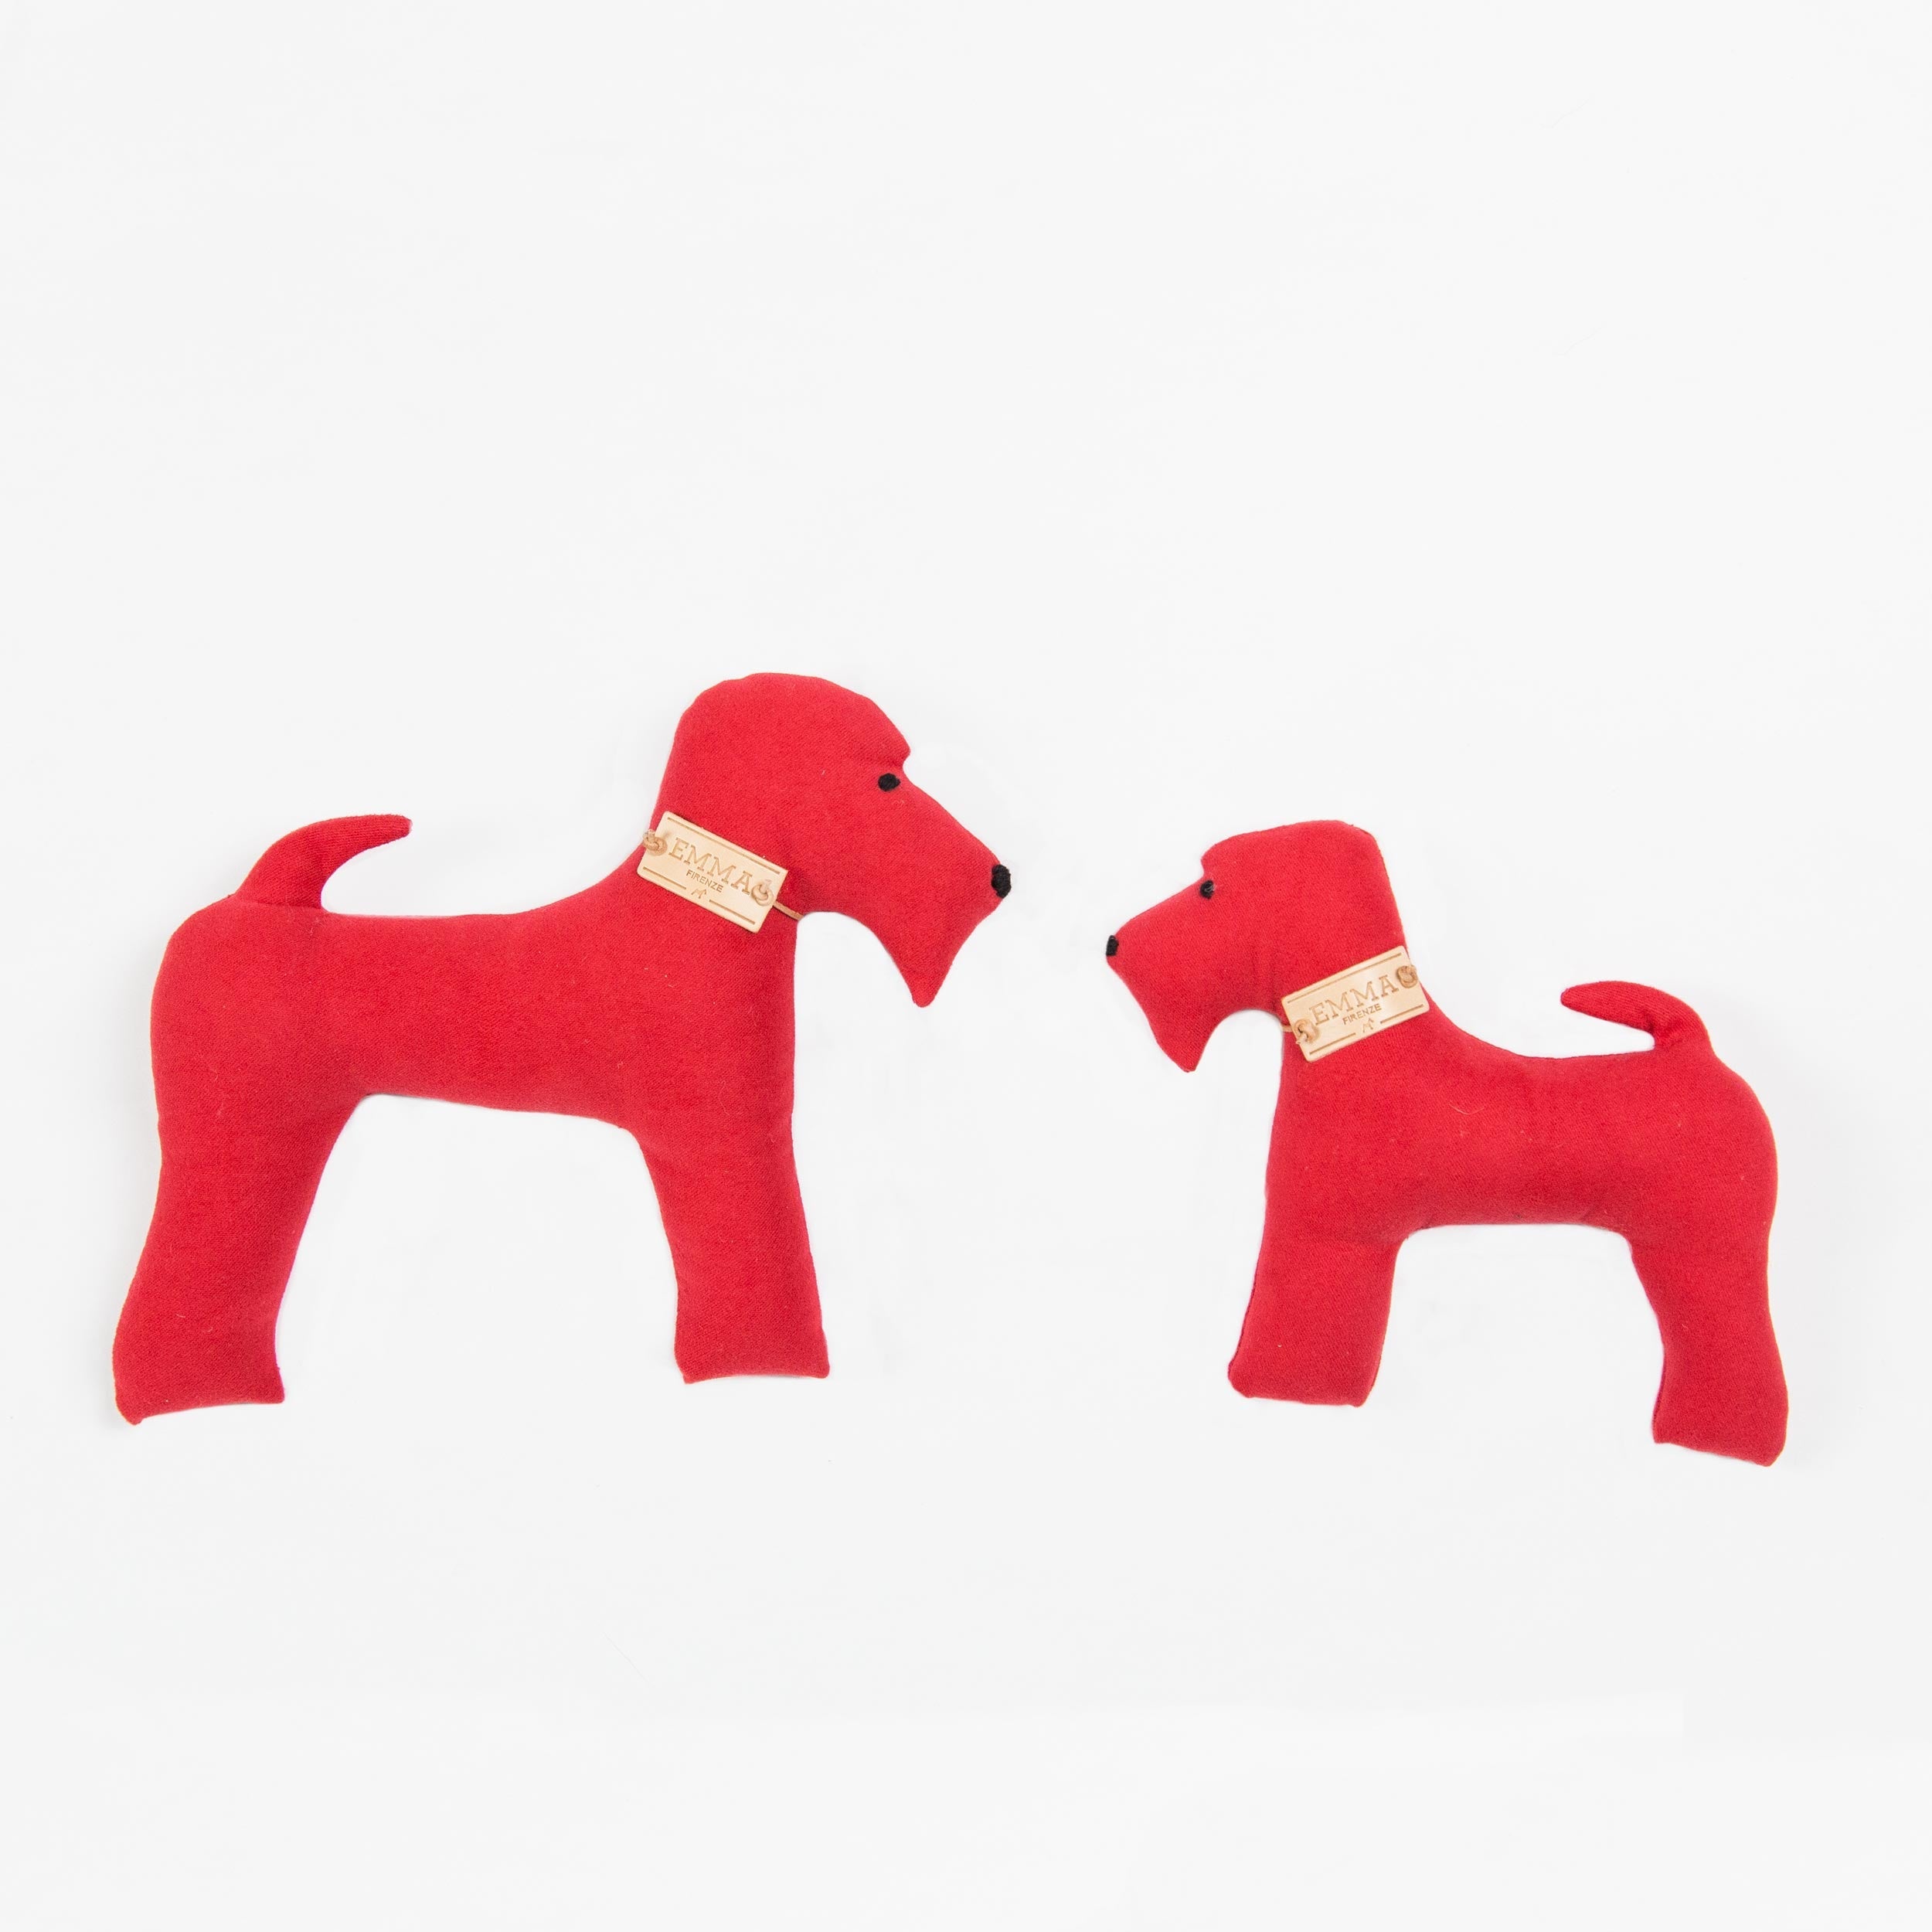 Gift Toy In Red Moleskin Fabric Emma Firenze